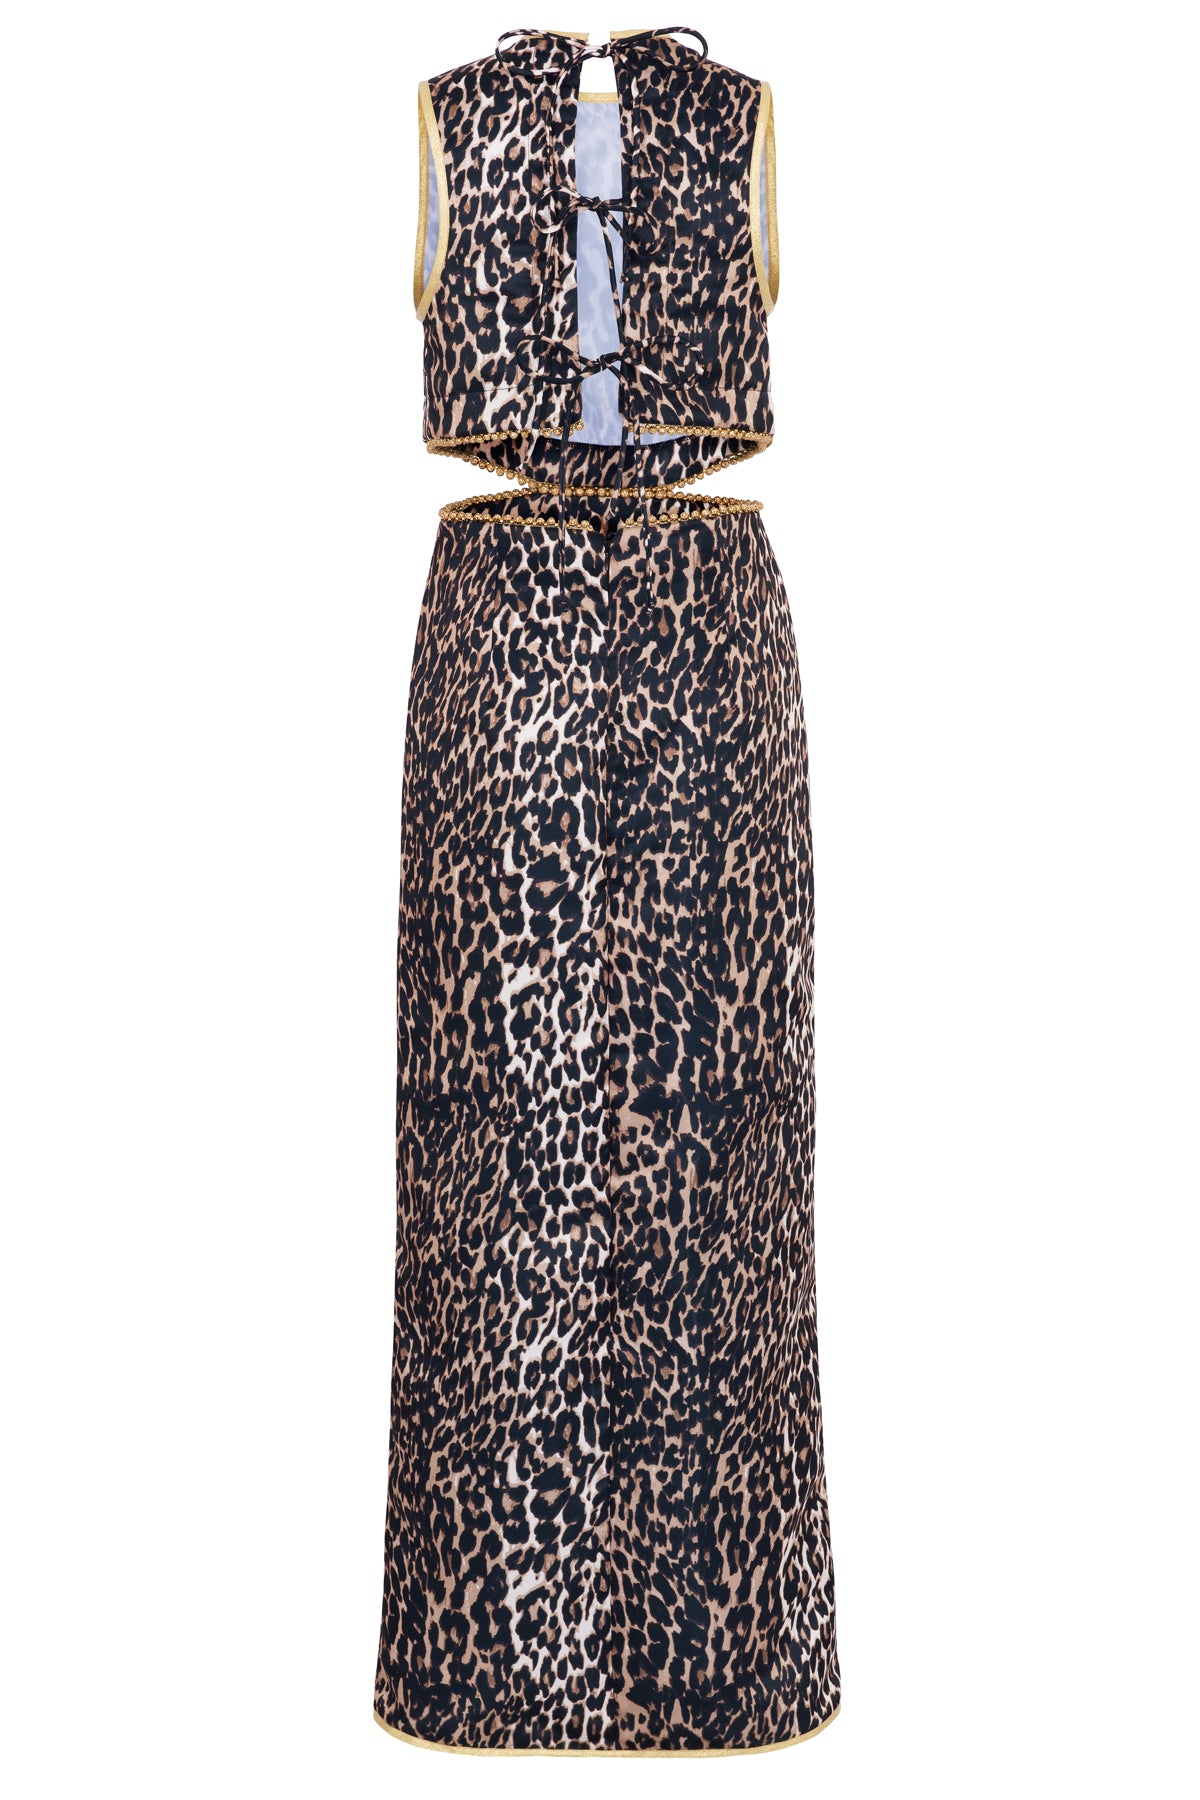 Cher Leopard Print Cutout Maxi Dress- Made to Order